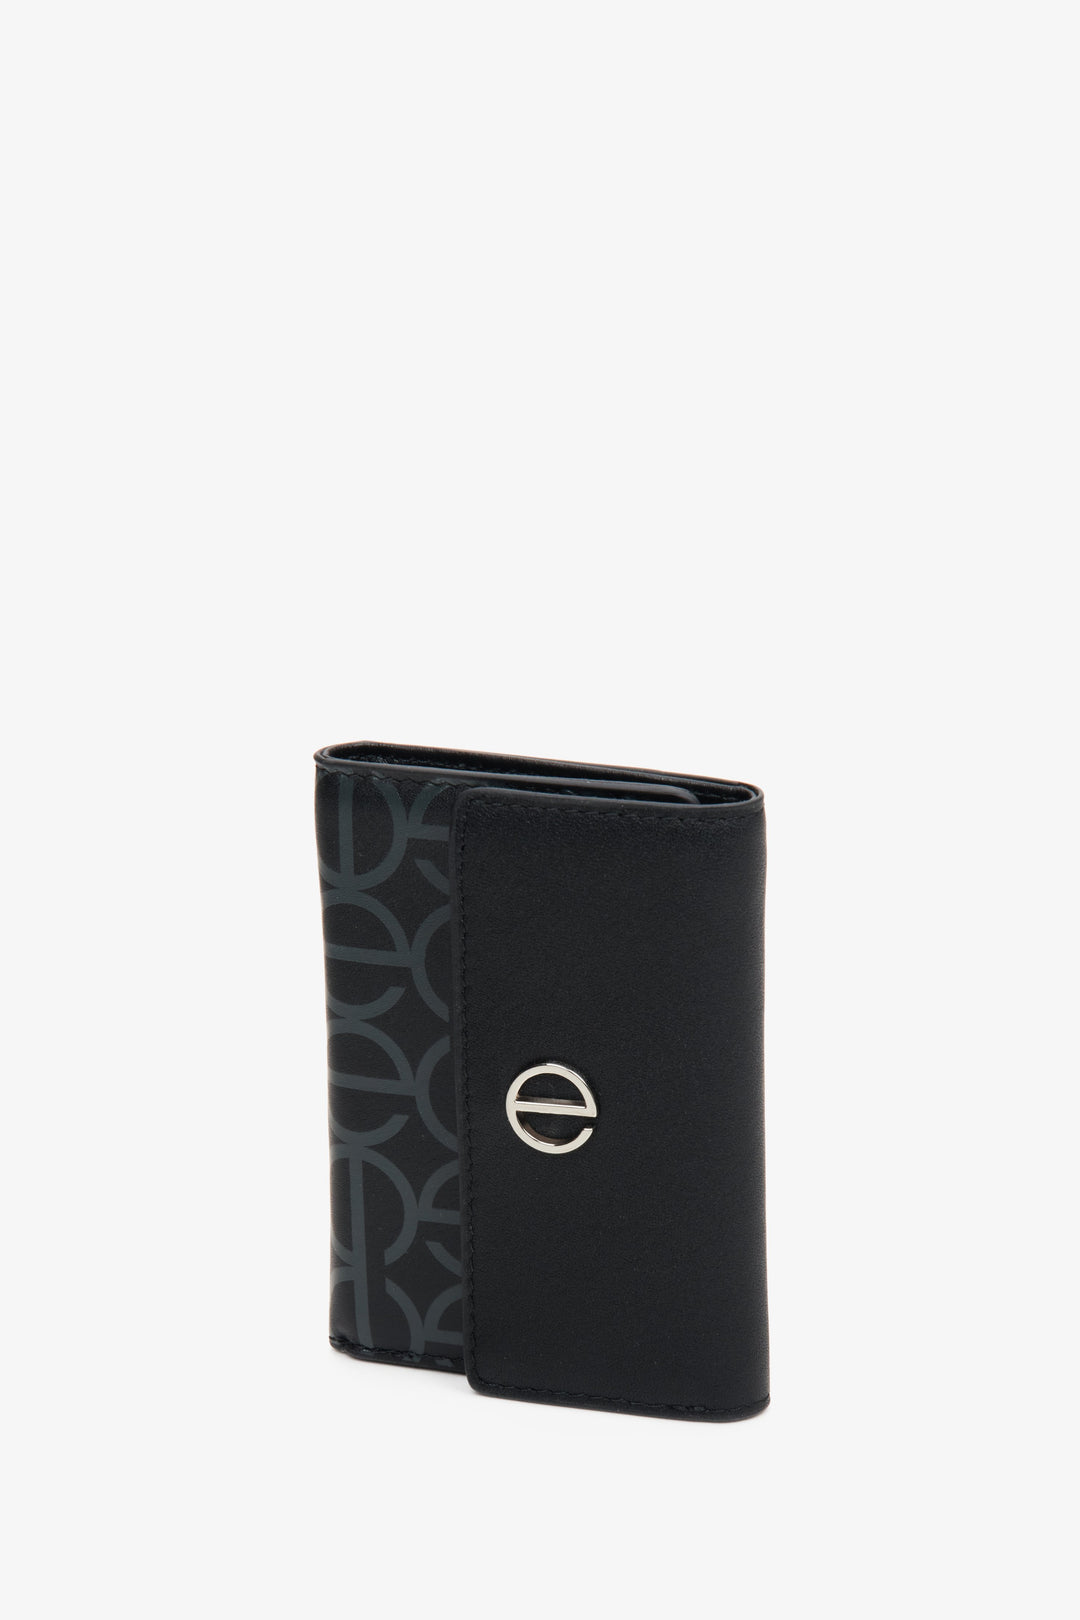 Medium-sized women's black leather wallet by Estro.